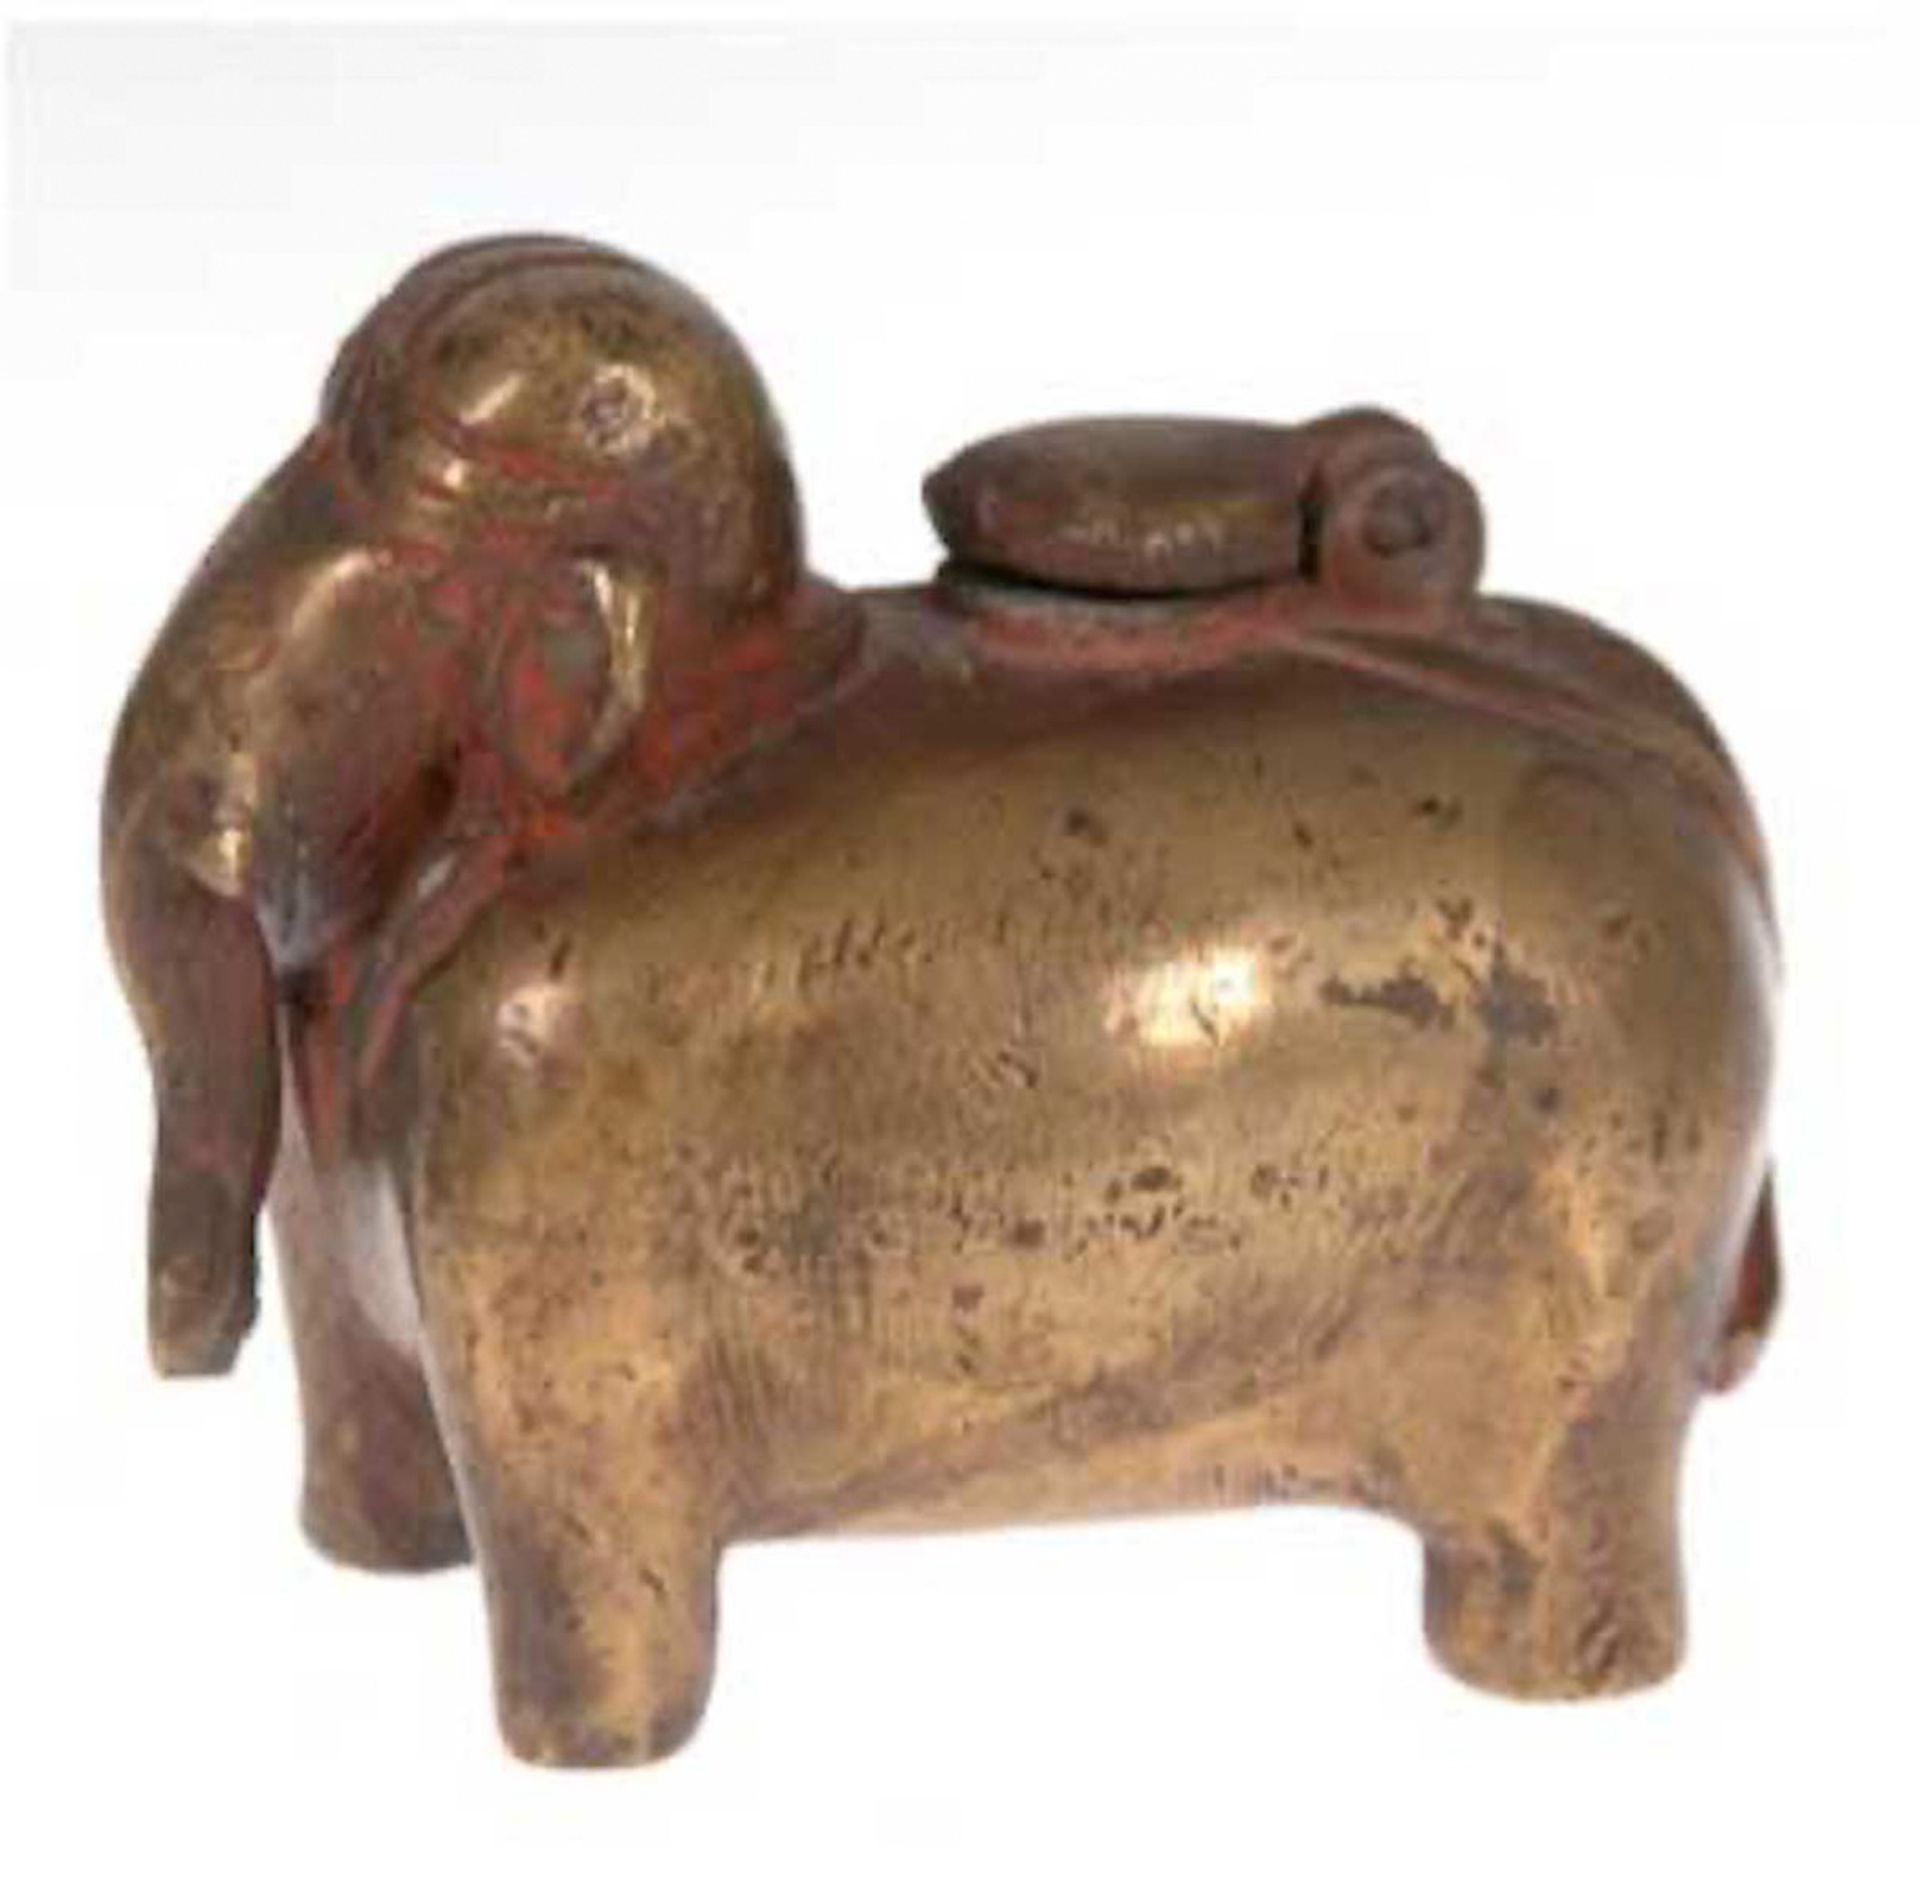 Tintenfass "Elefant", Indien, 19. Jh., Messing, Gebrauchspuren, H. 6,5 cm